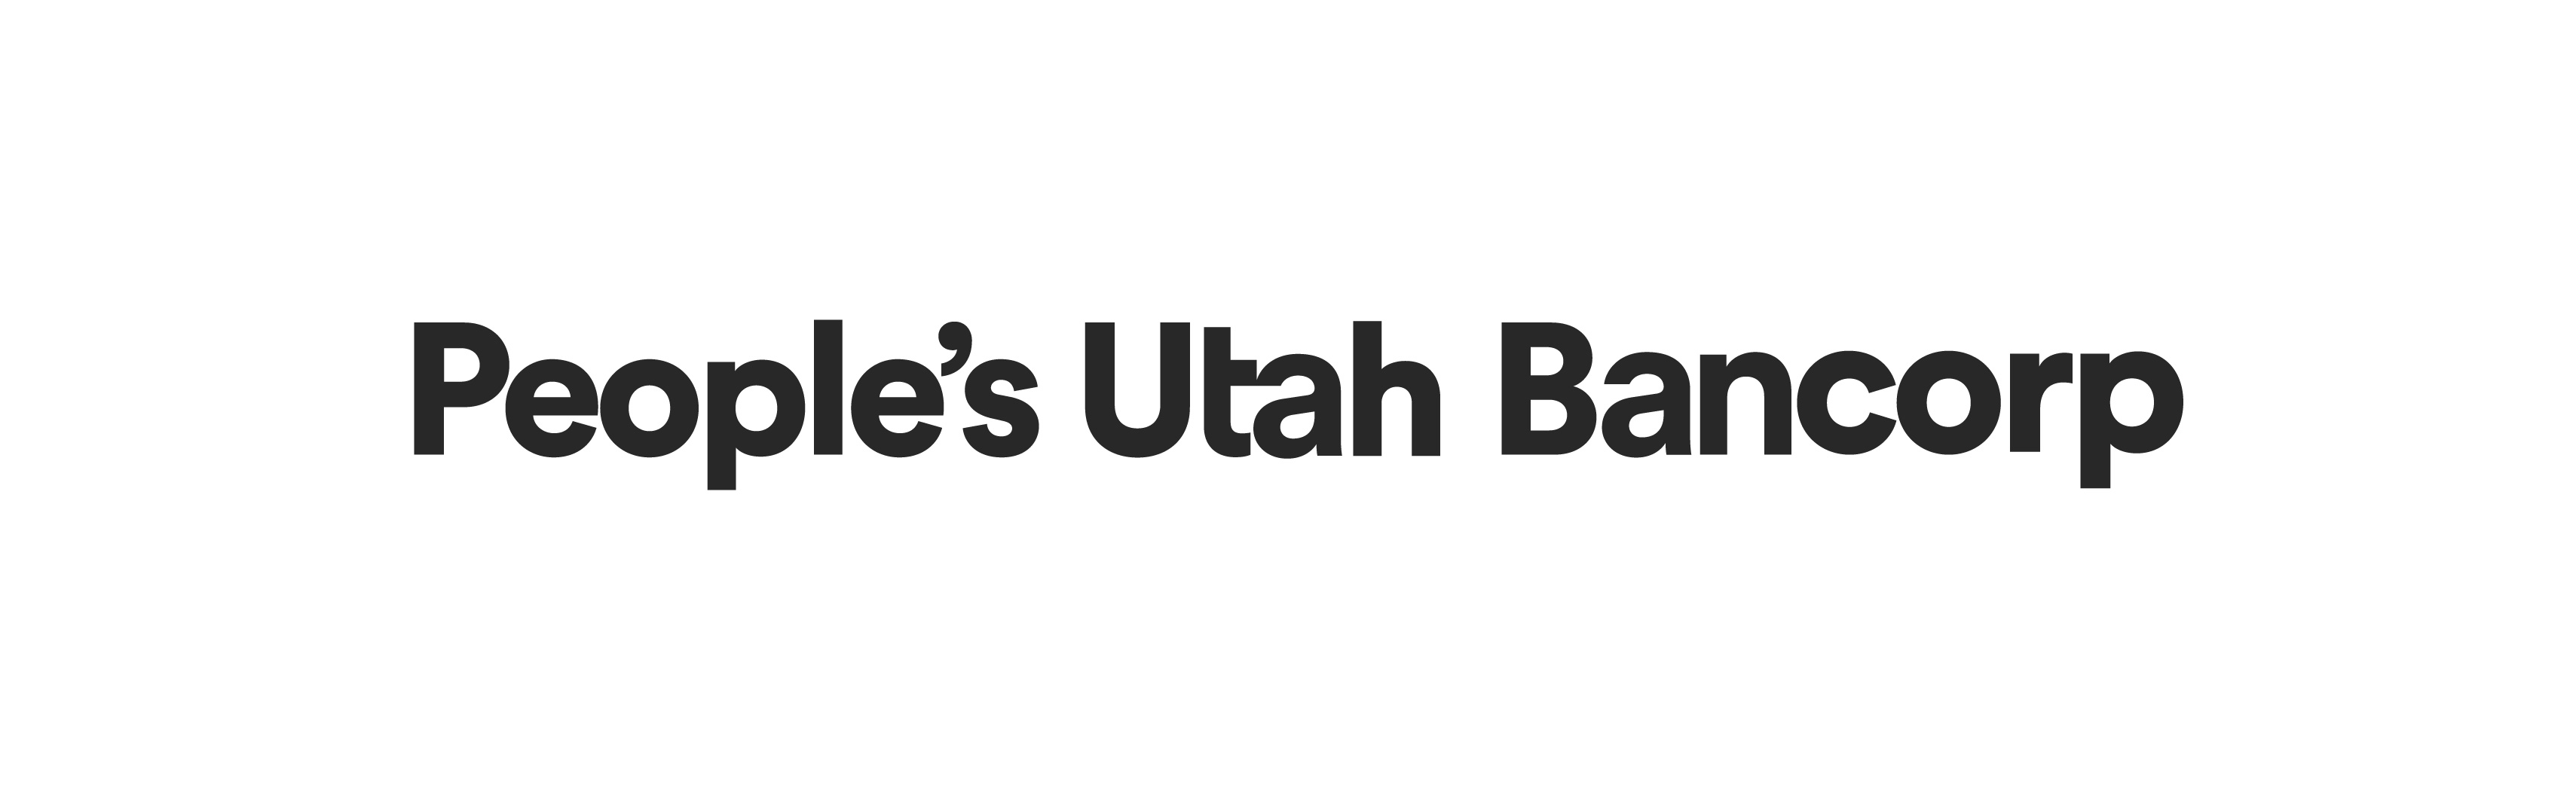 Peoples Utah Bancorp logos-02.jpg